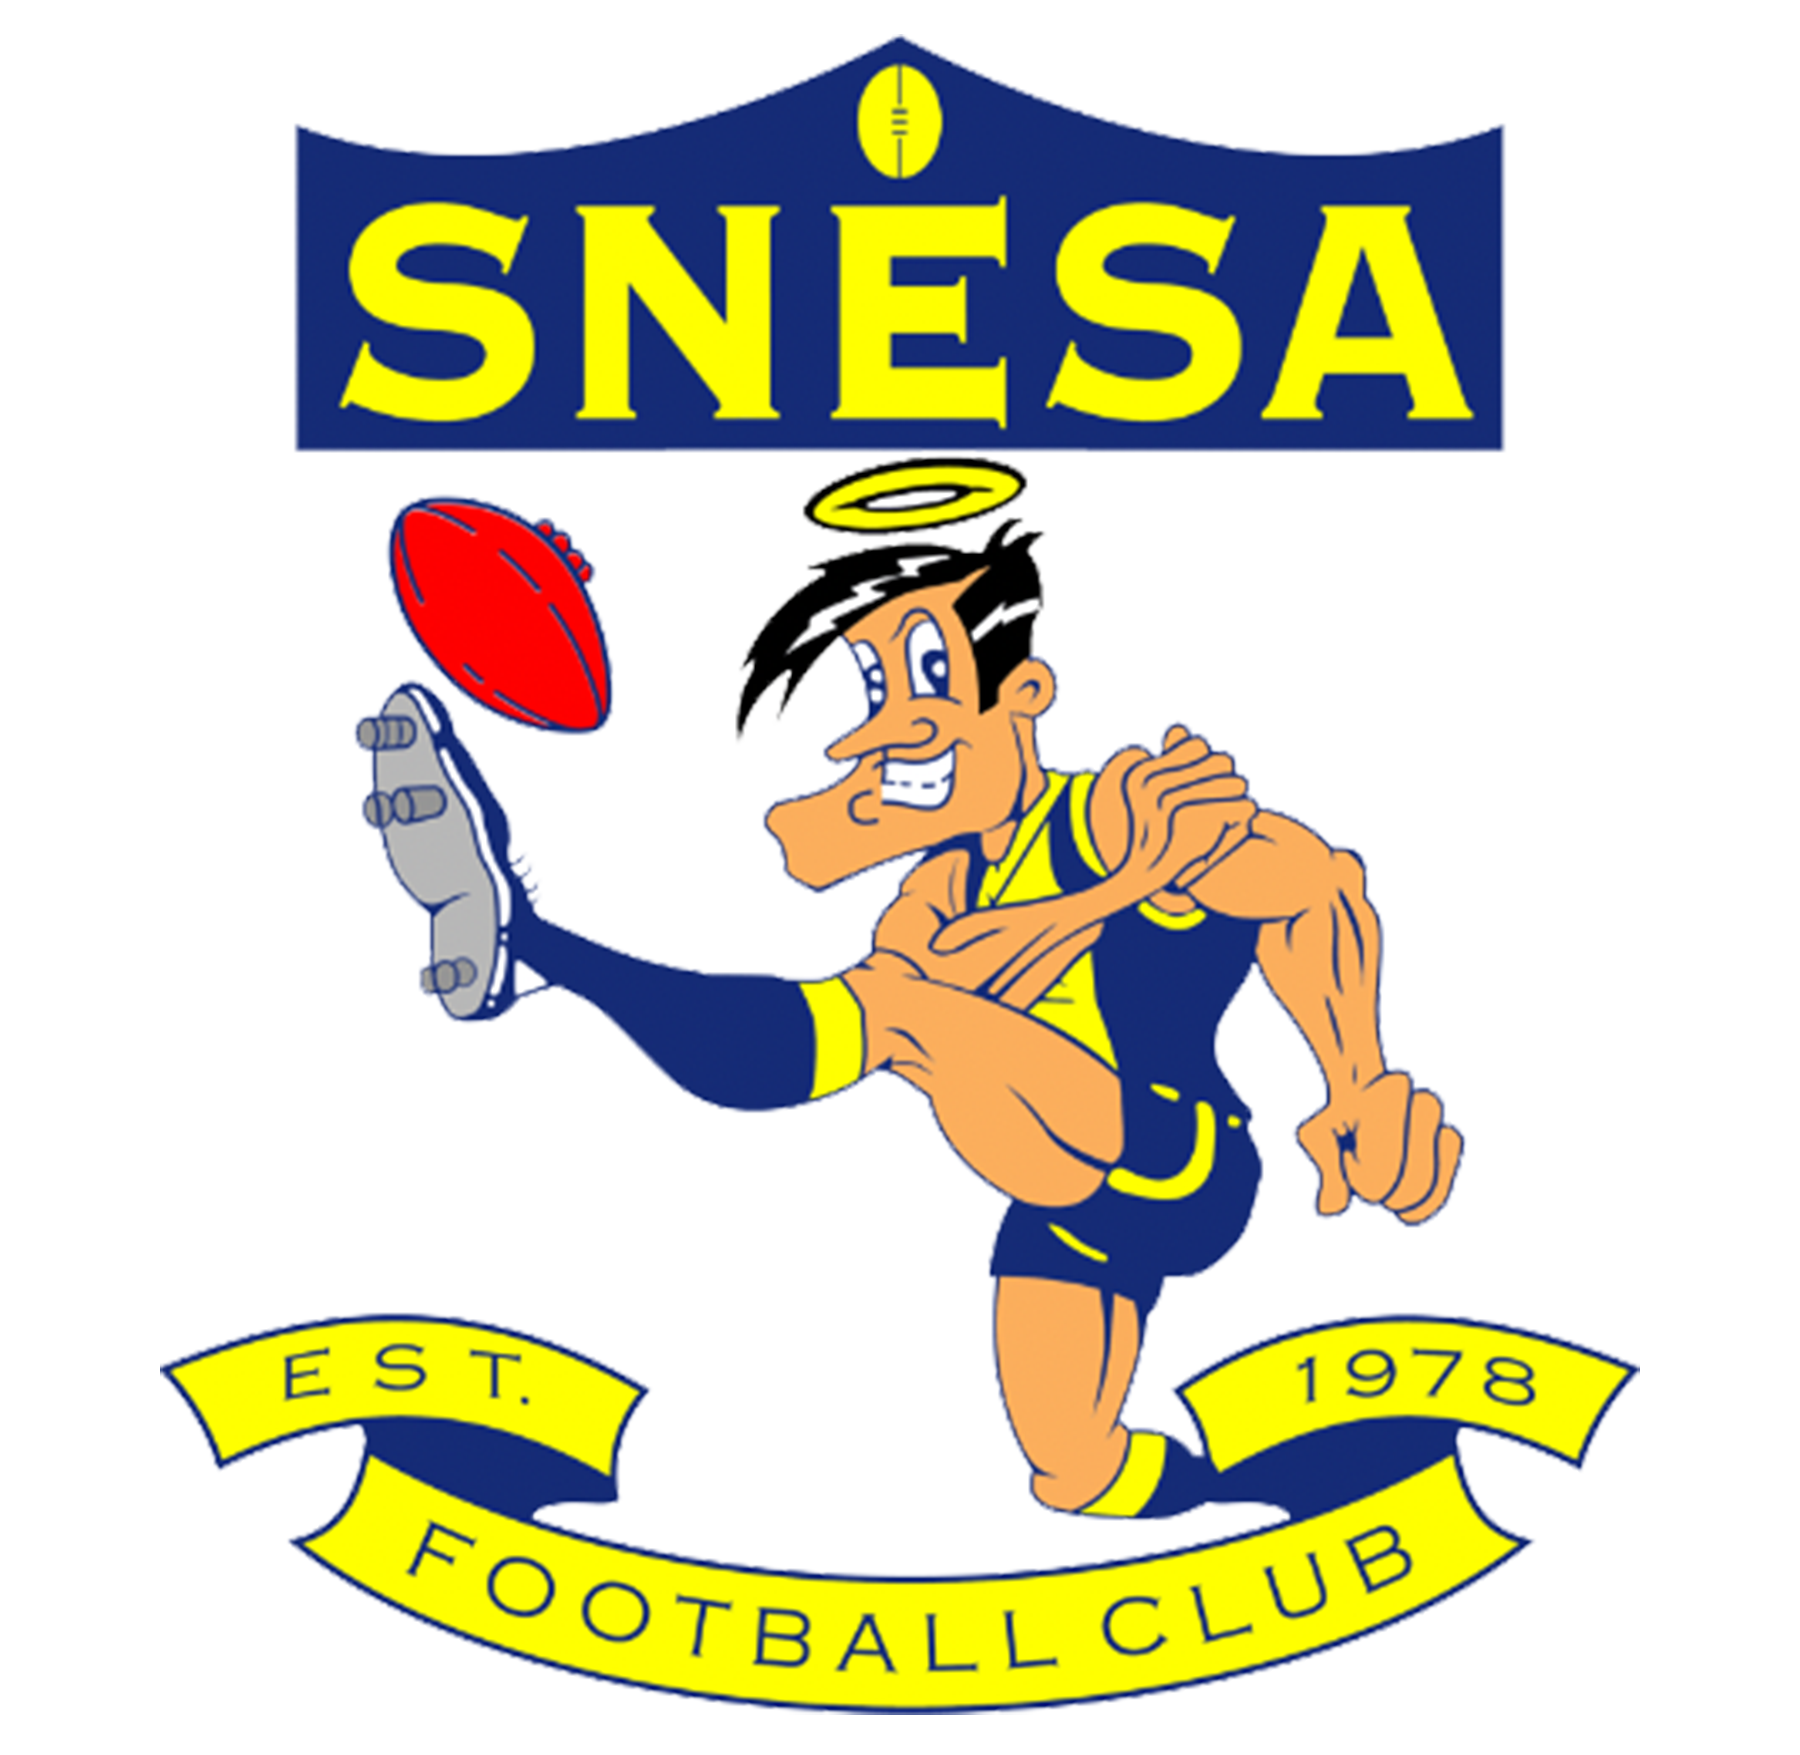 SNESA Football Club